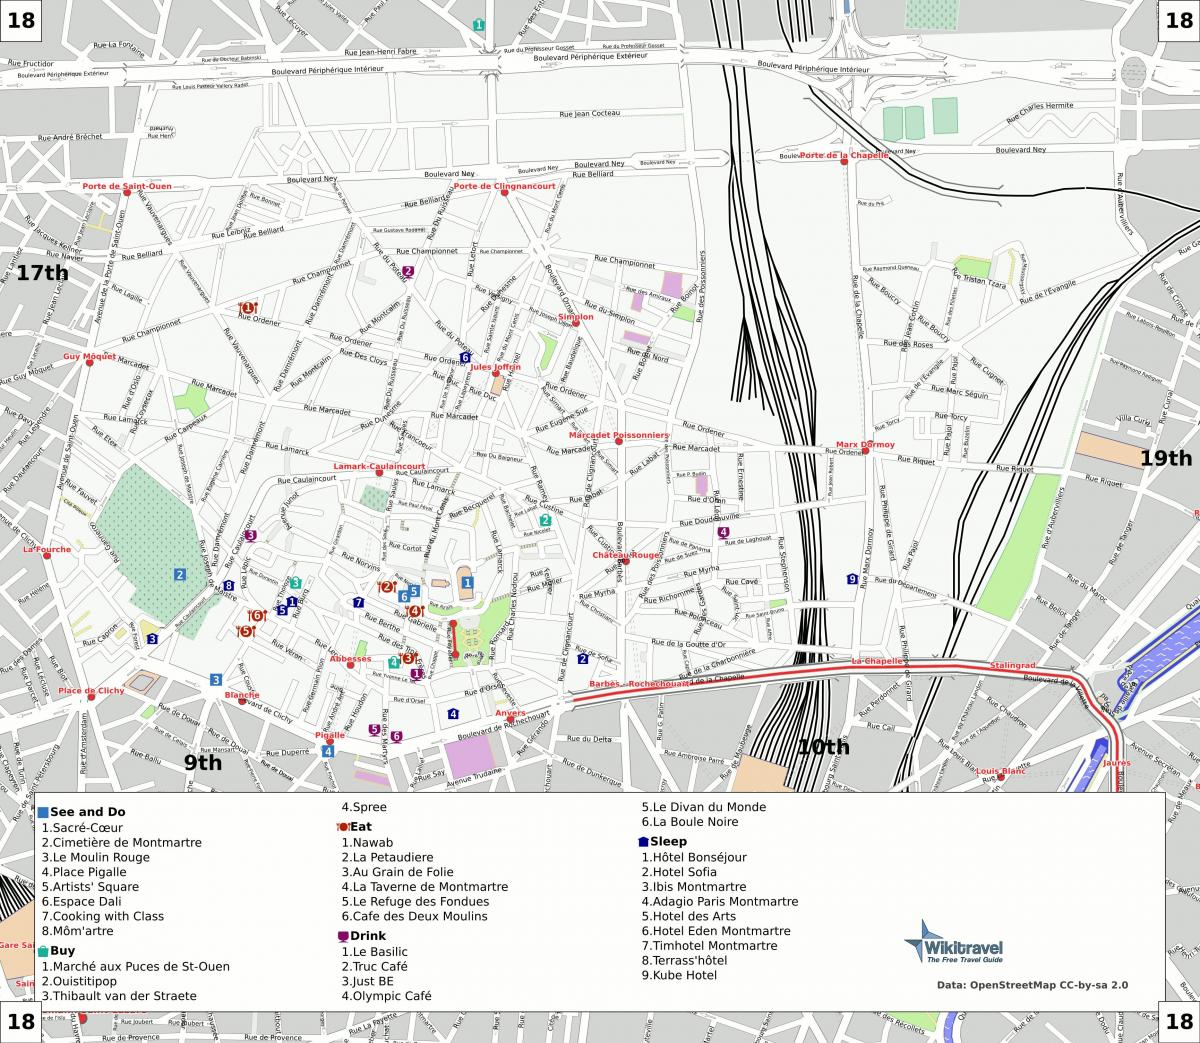 Peta ke-18 arrondissement Paris